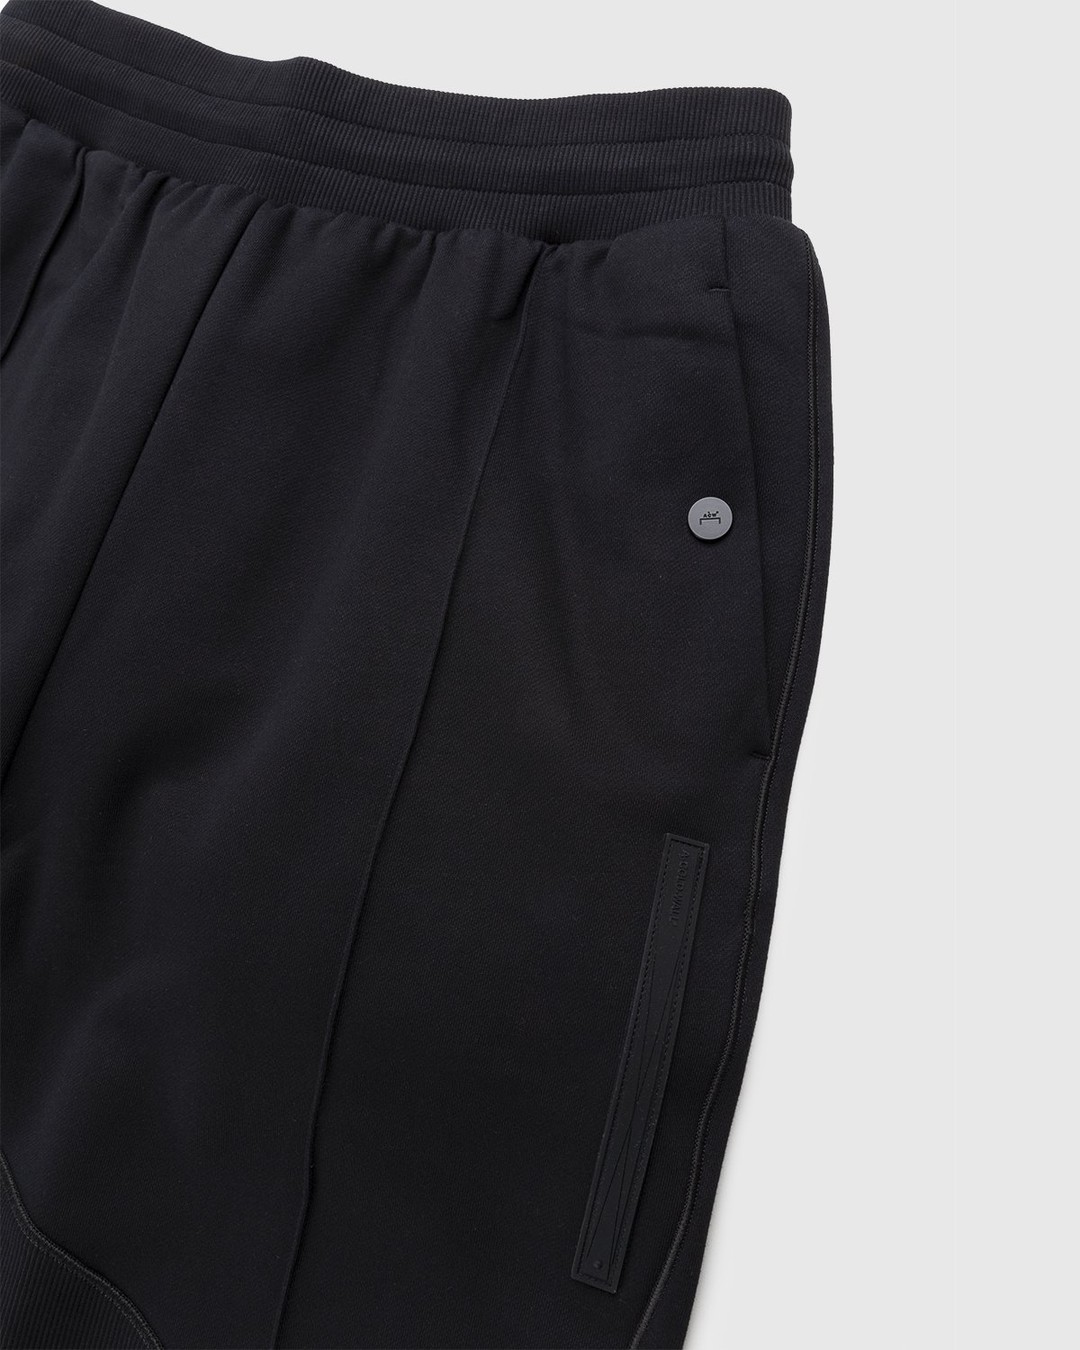 A-Cold-Wall* – Granular Sweatpants Black - Pants - Black - Image 5